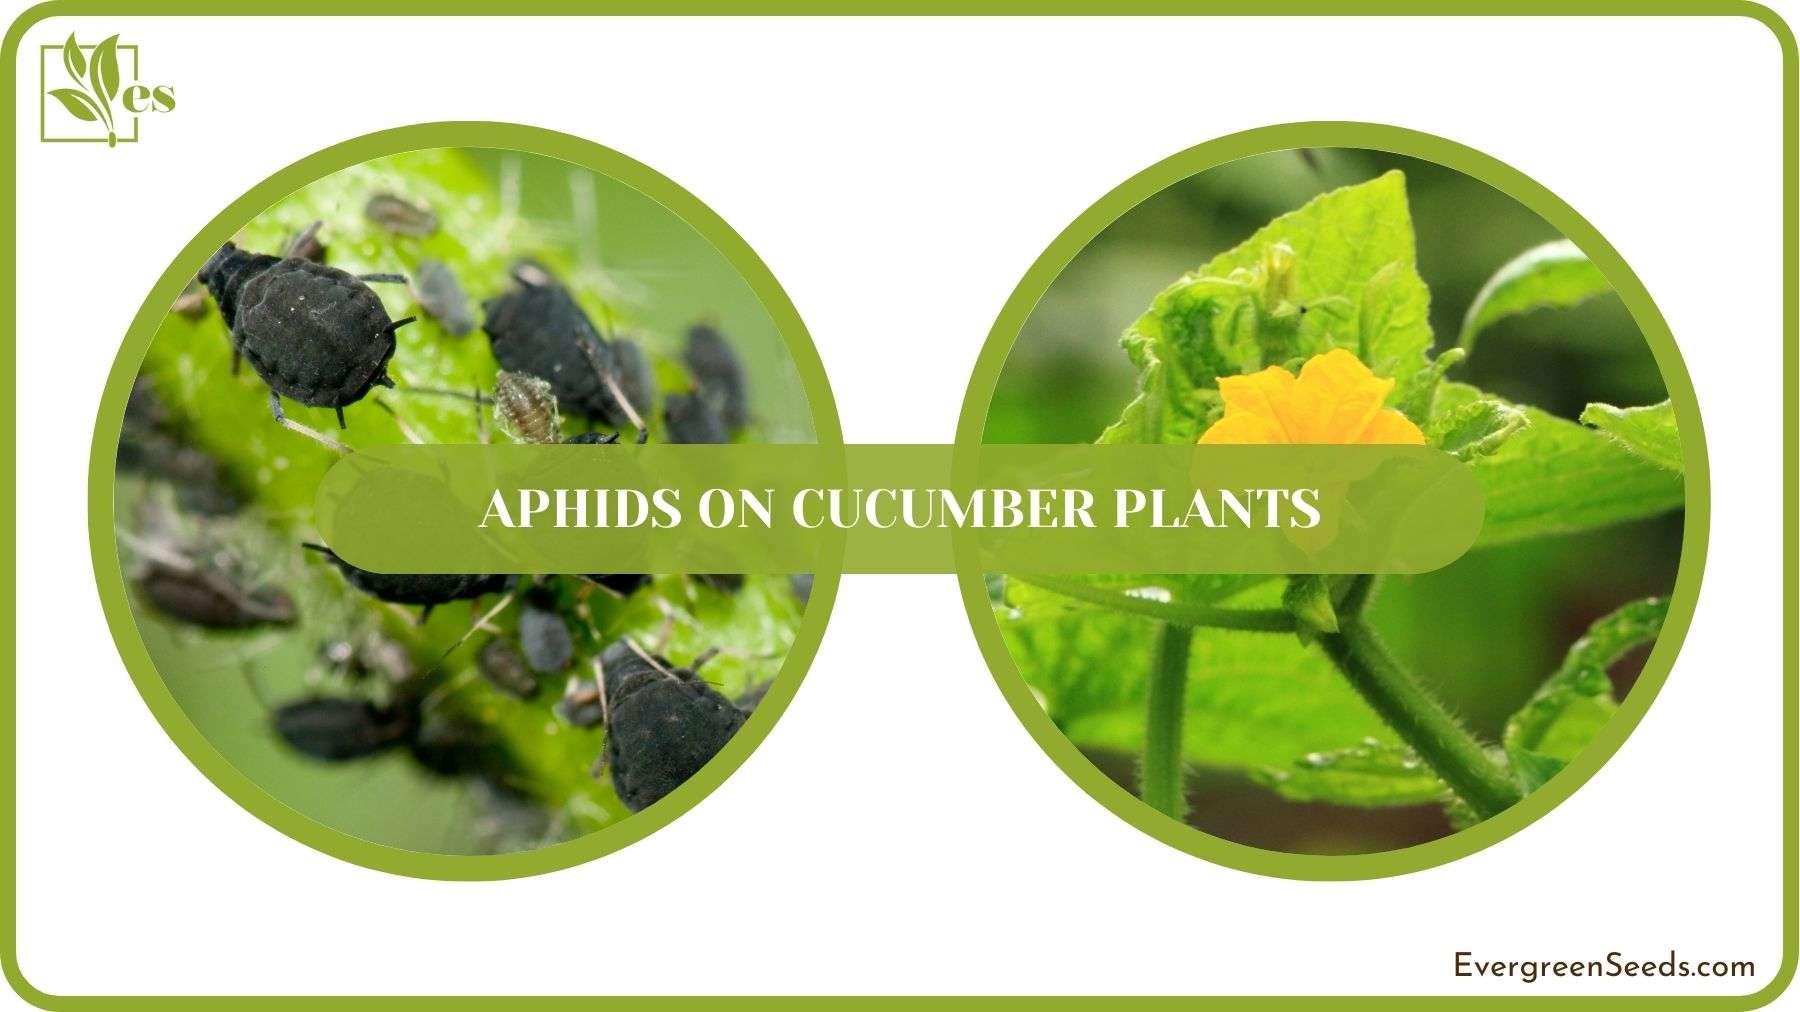 Aphids on Cucumber Plants Details